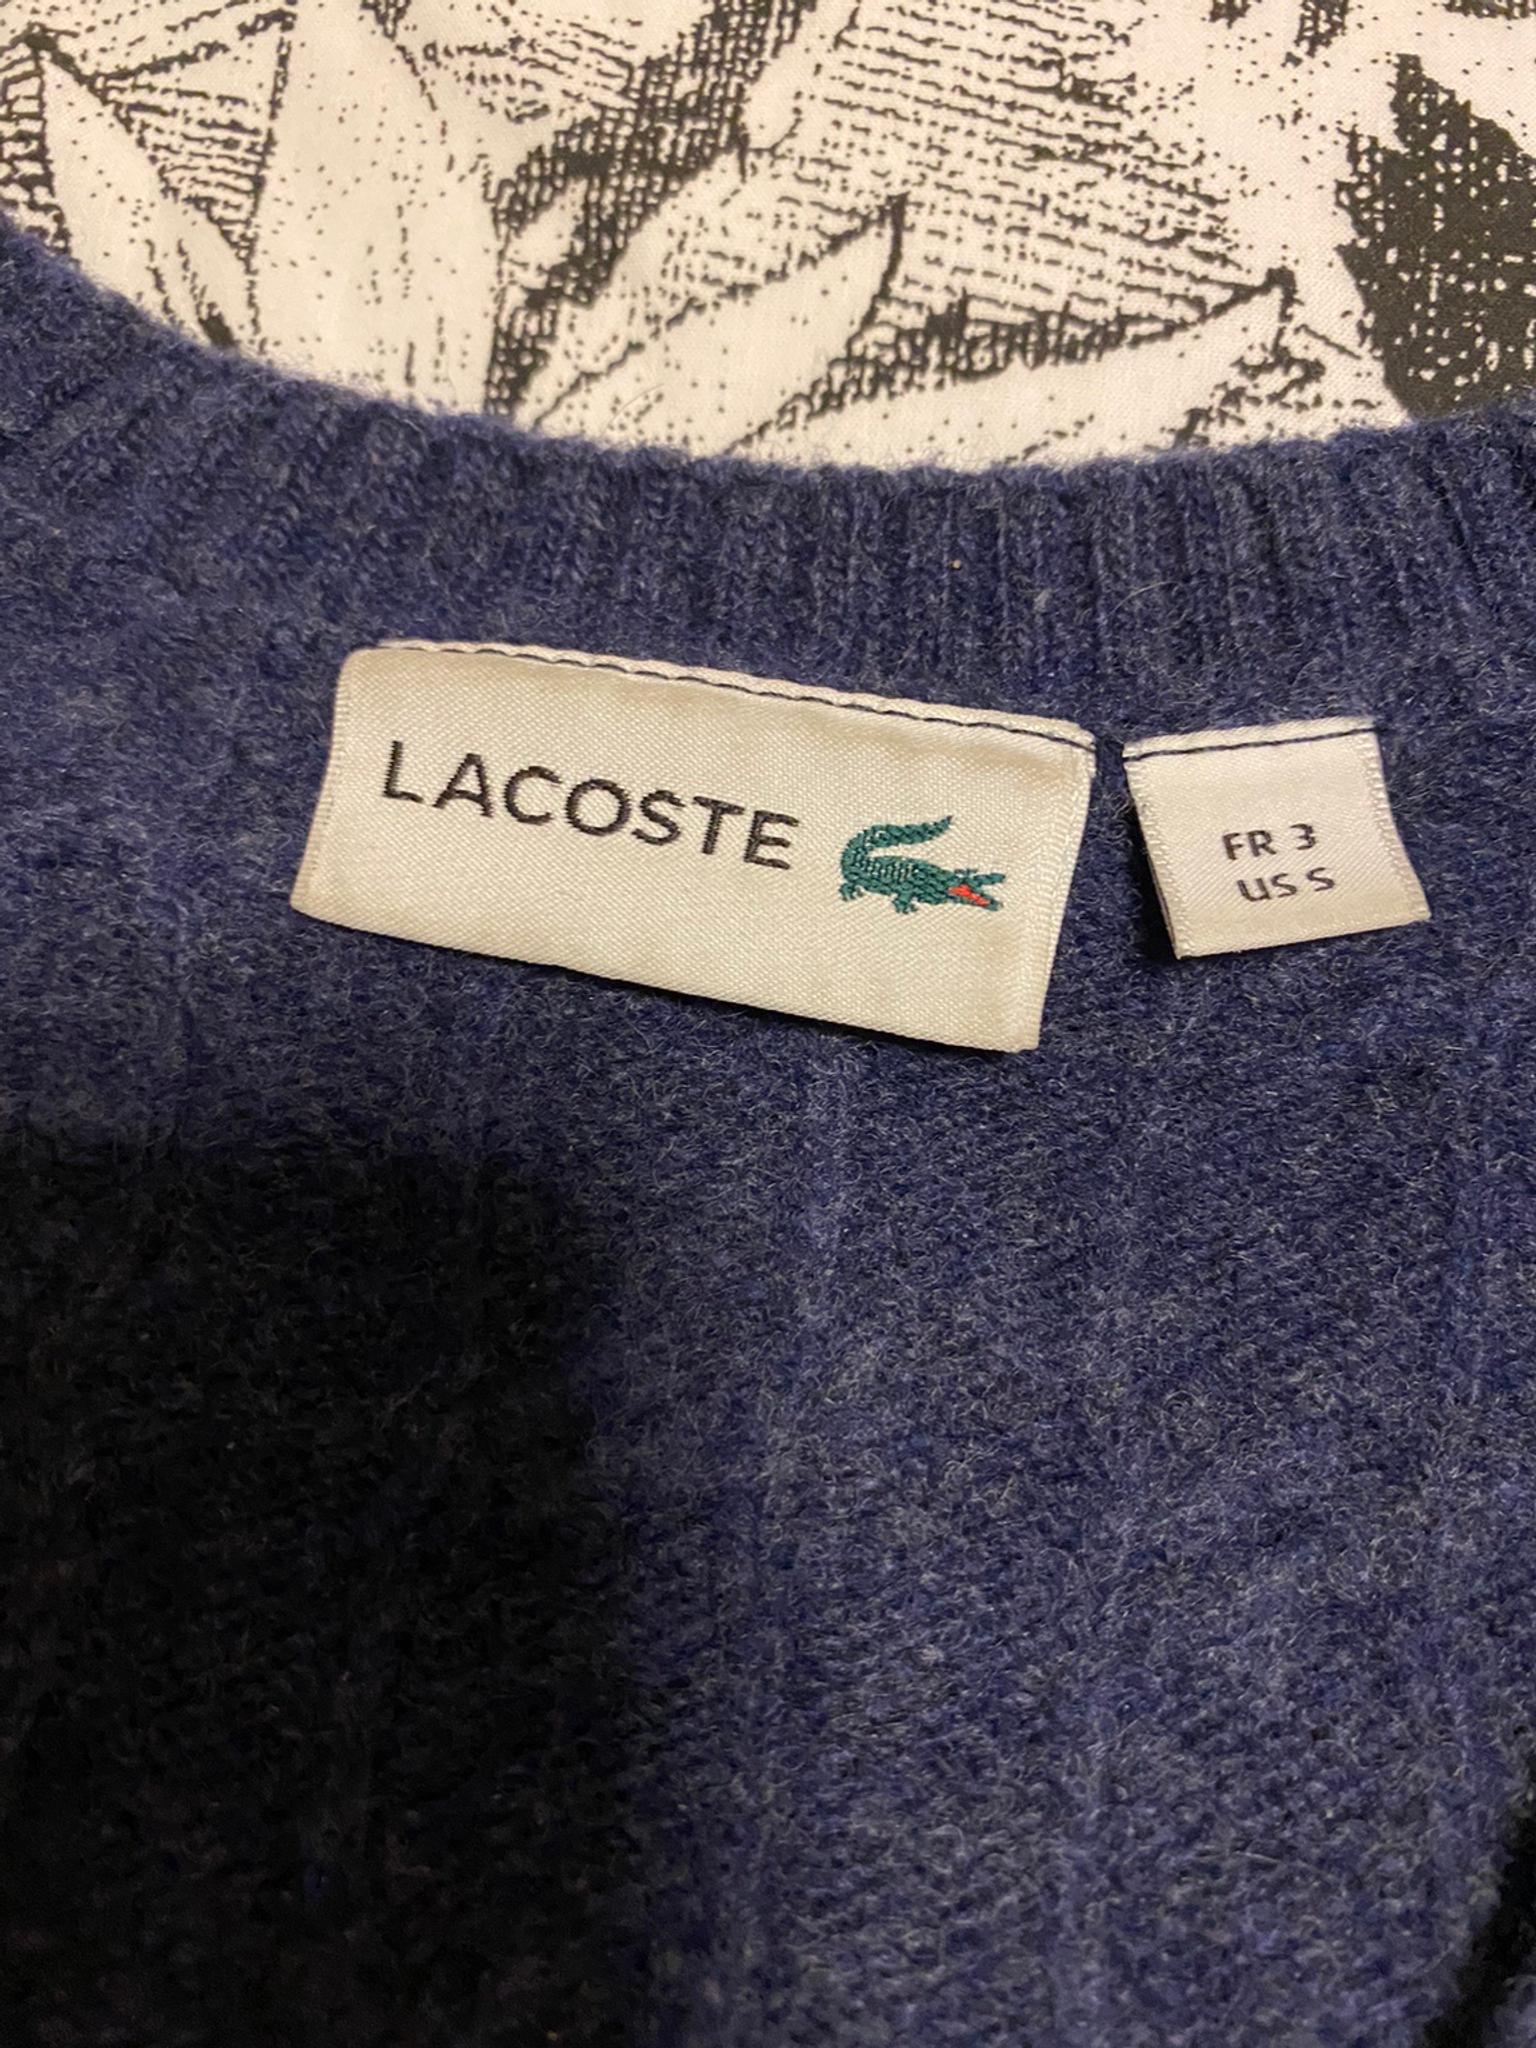 lacoste men's jumpers